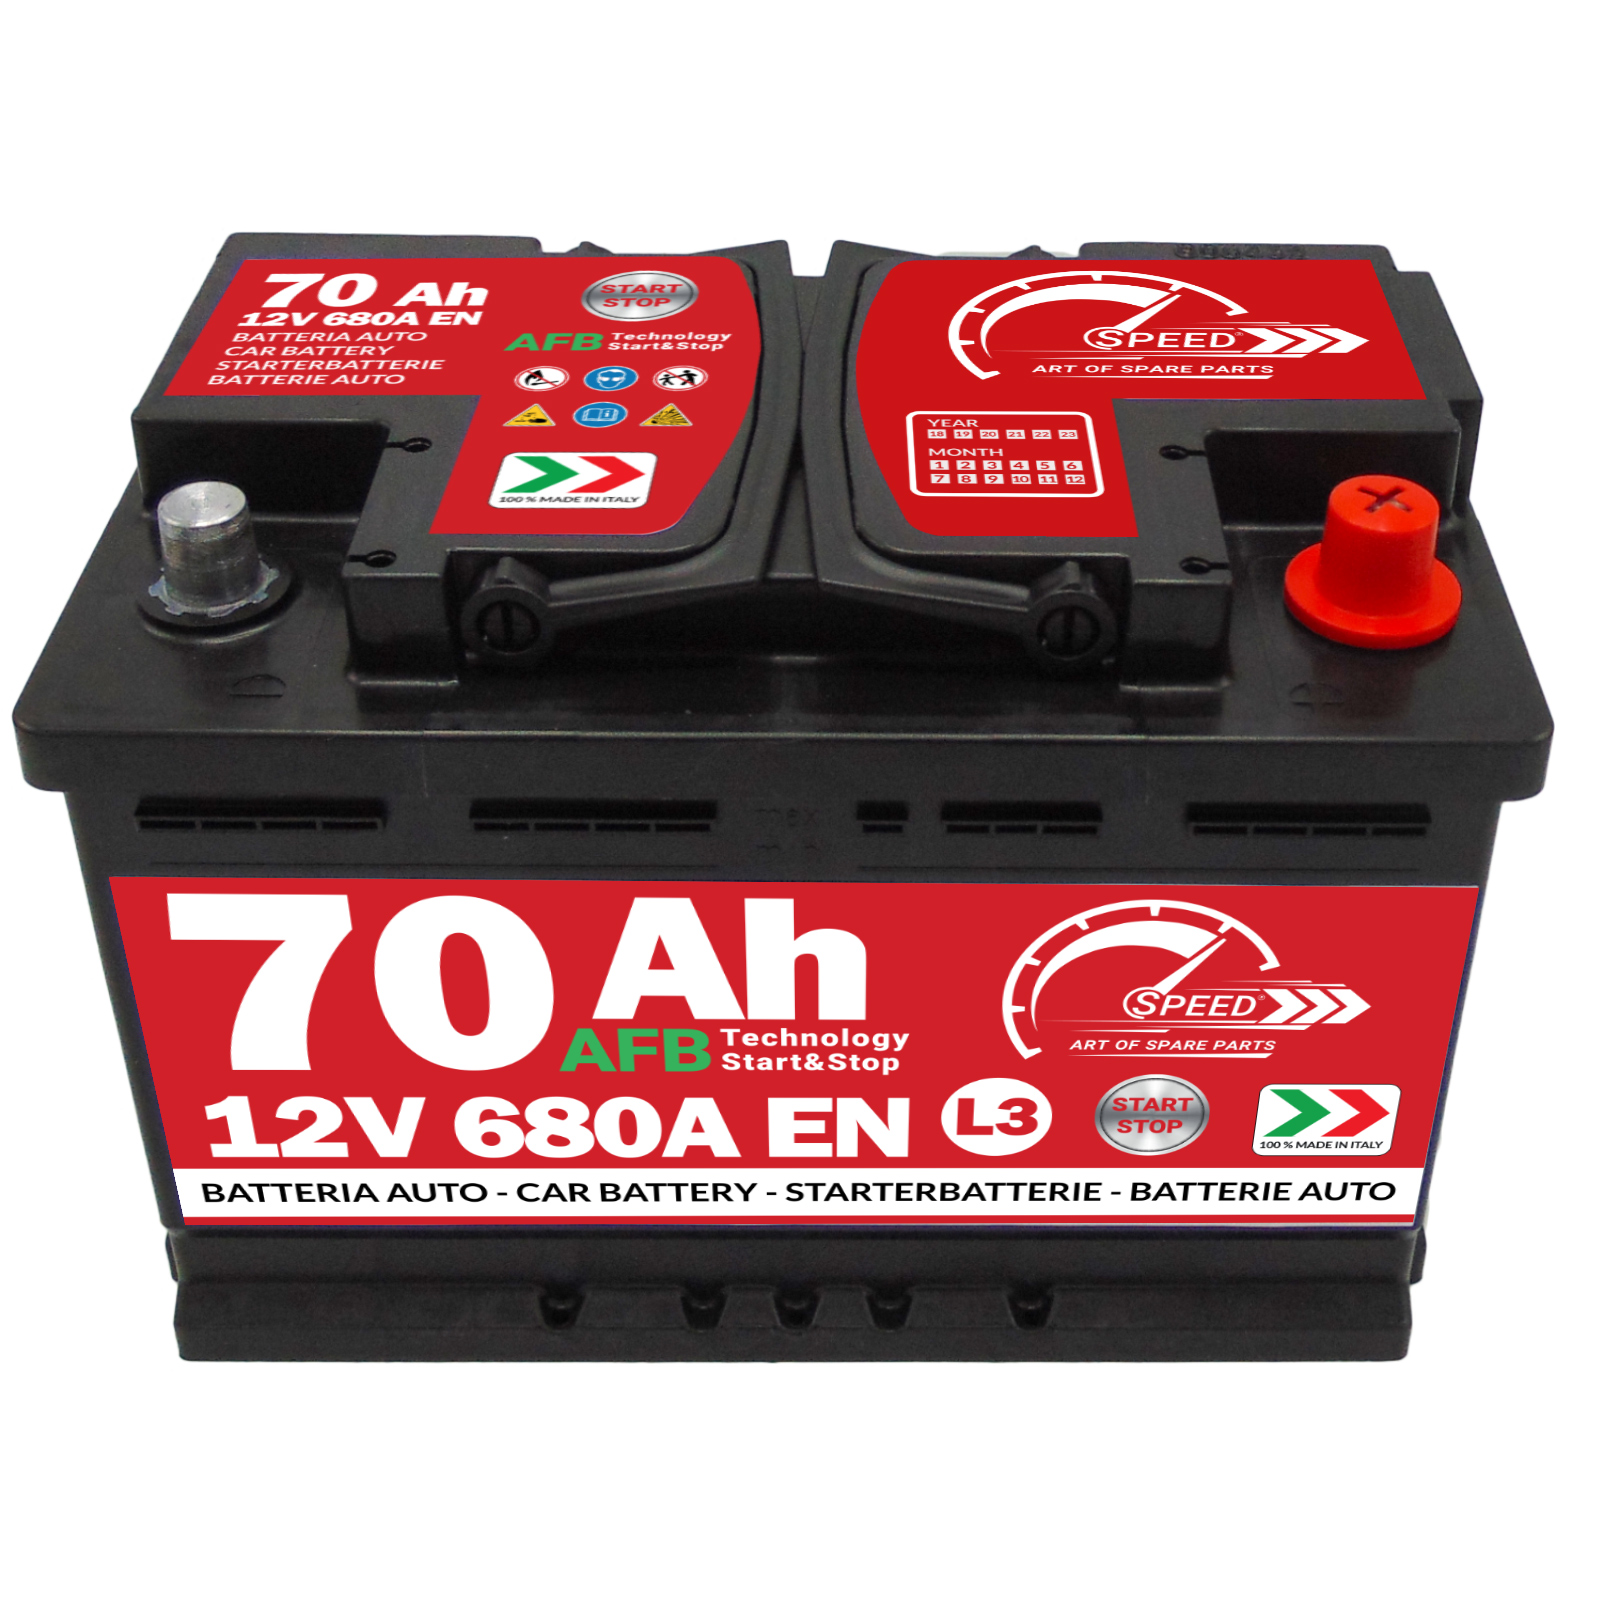 Batteria Speed 70Ah 680A Start-Stop AFB - Ricambi auto SMC